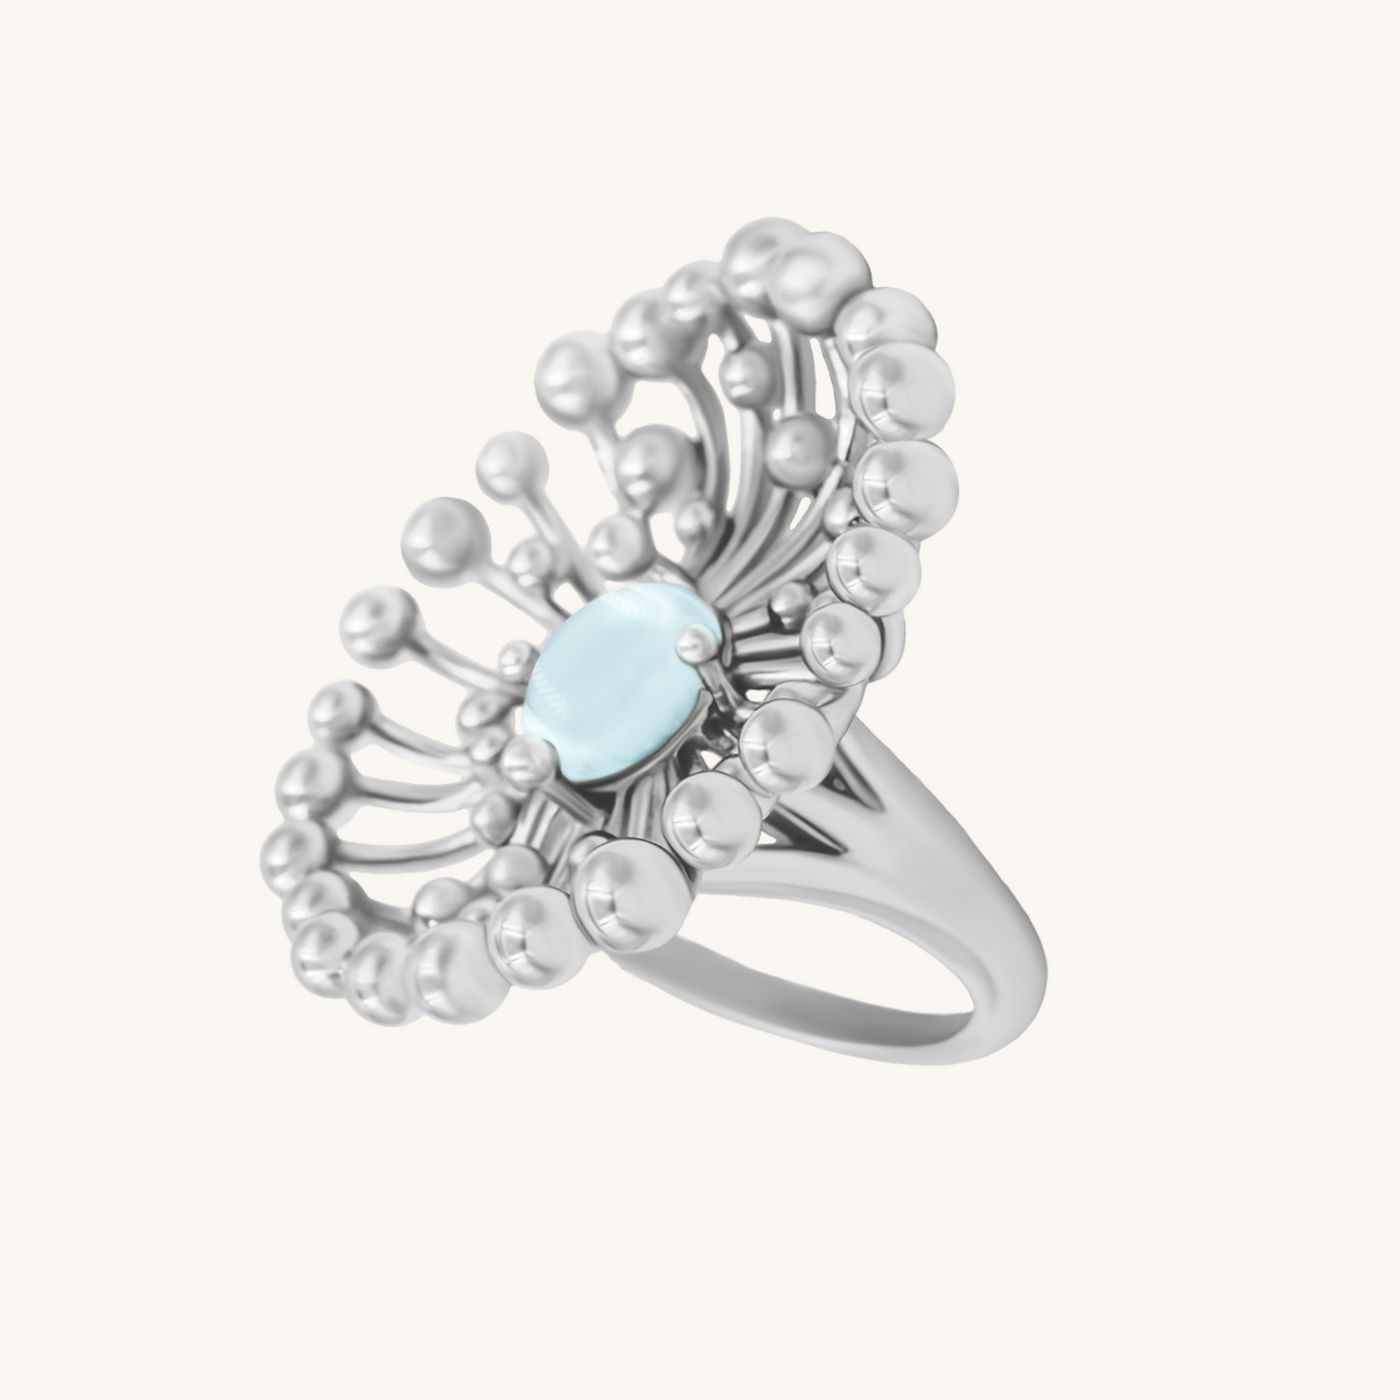 Dandelion Ring with Blue Crystal - Lilou Paris US